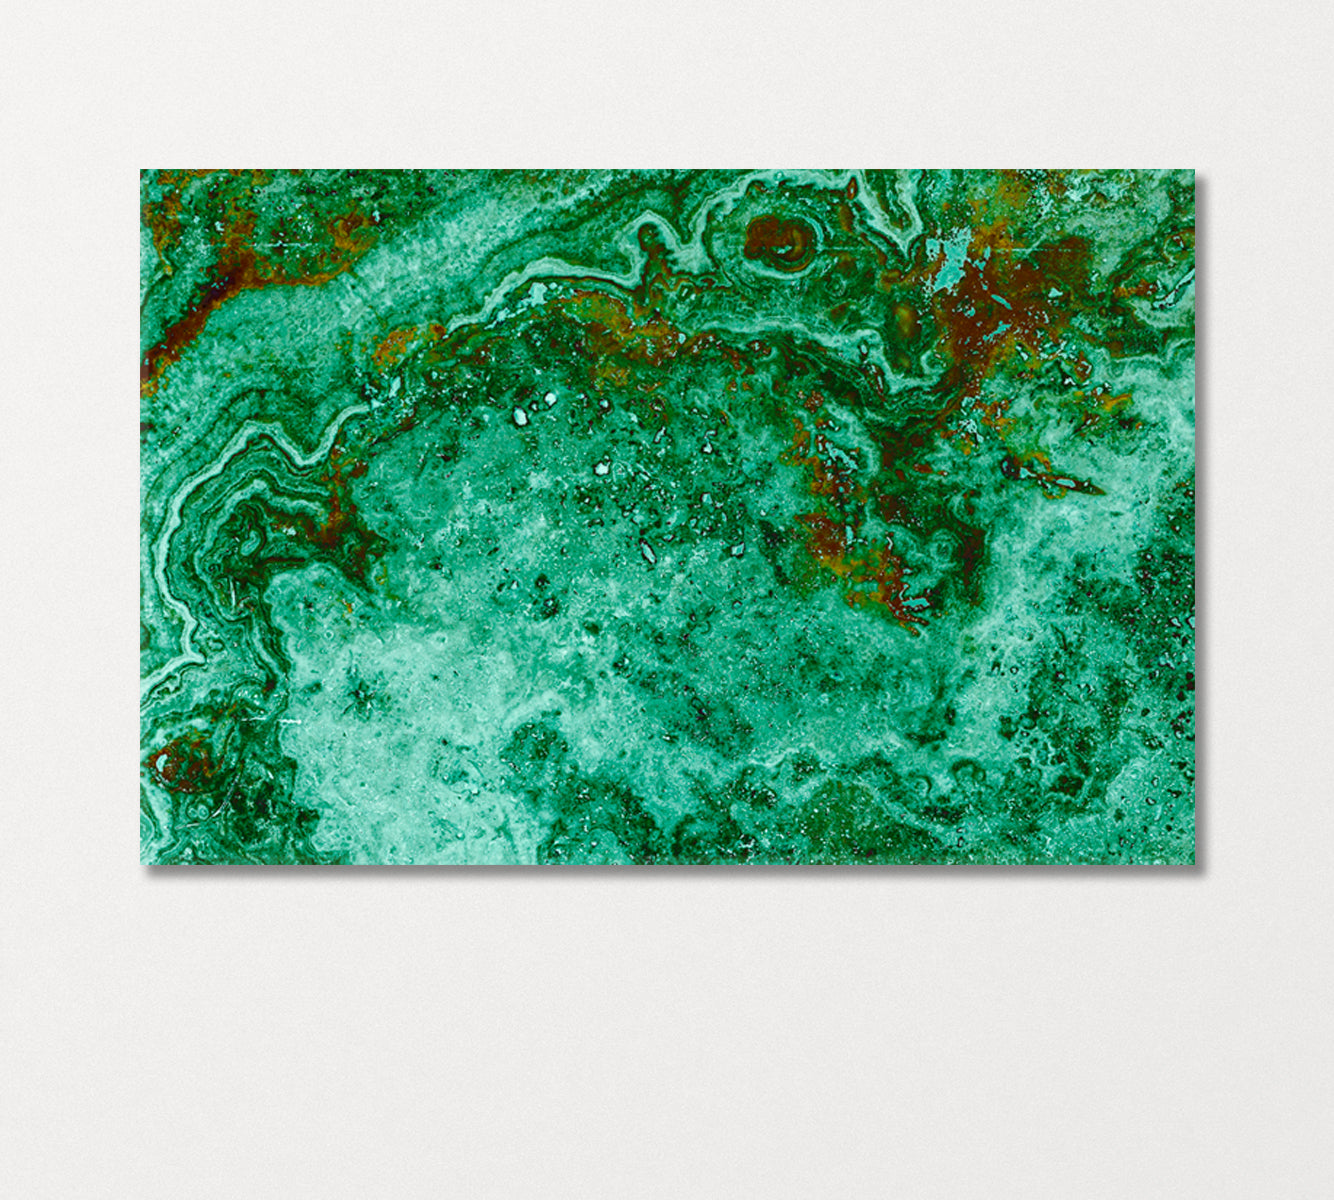 Emerald Green Marble Canvas Print-Canvas Print-CetArt-1 Panel-24x16 inches-CetArt